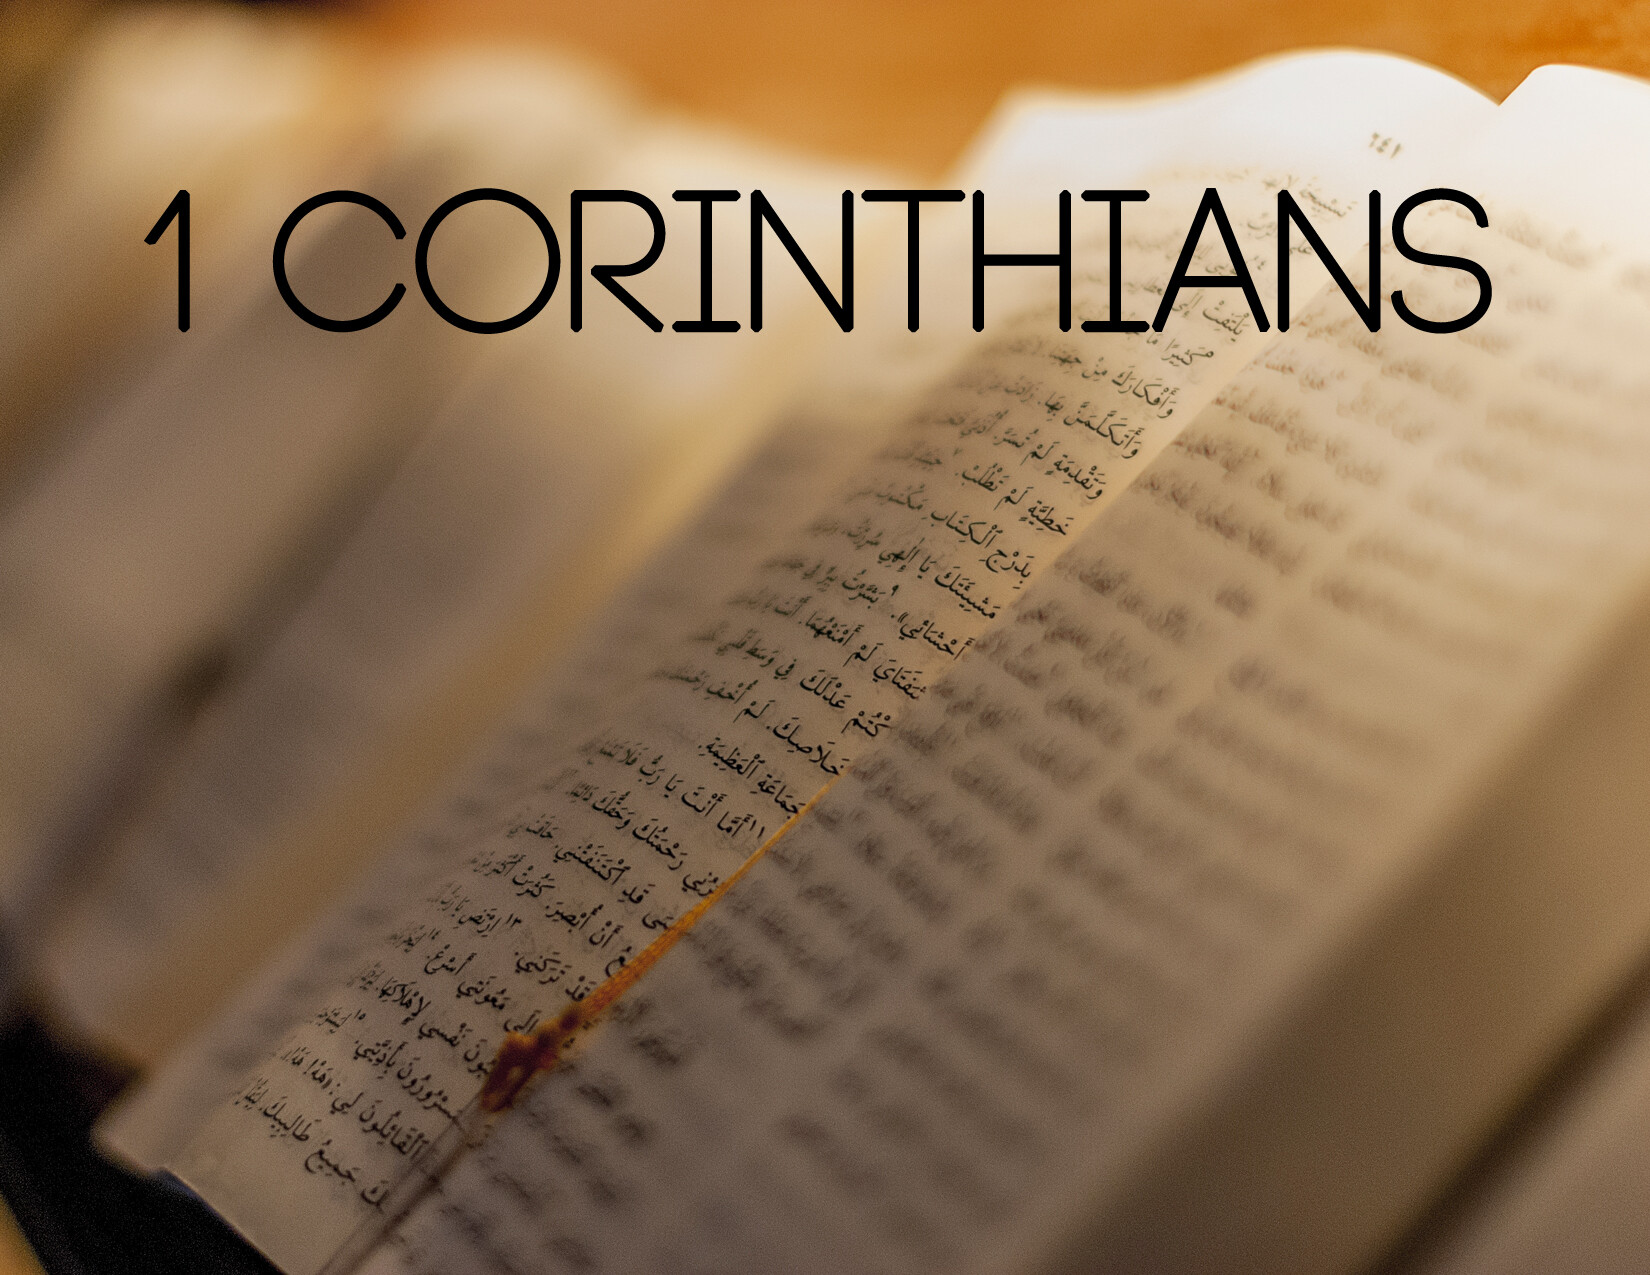 1 Corinthians 15